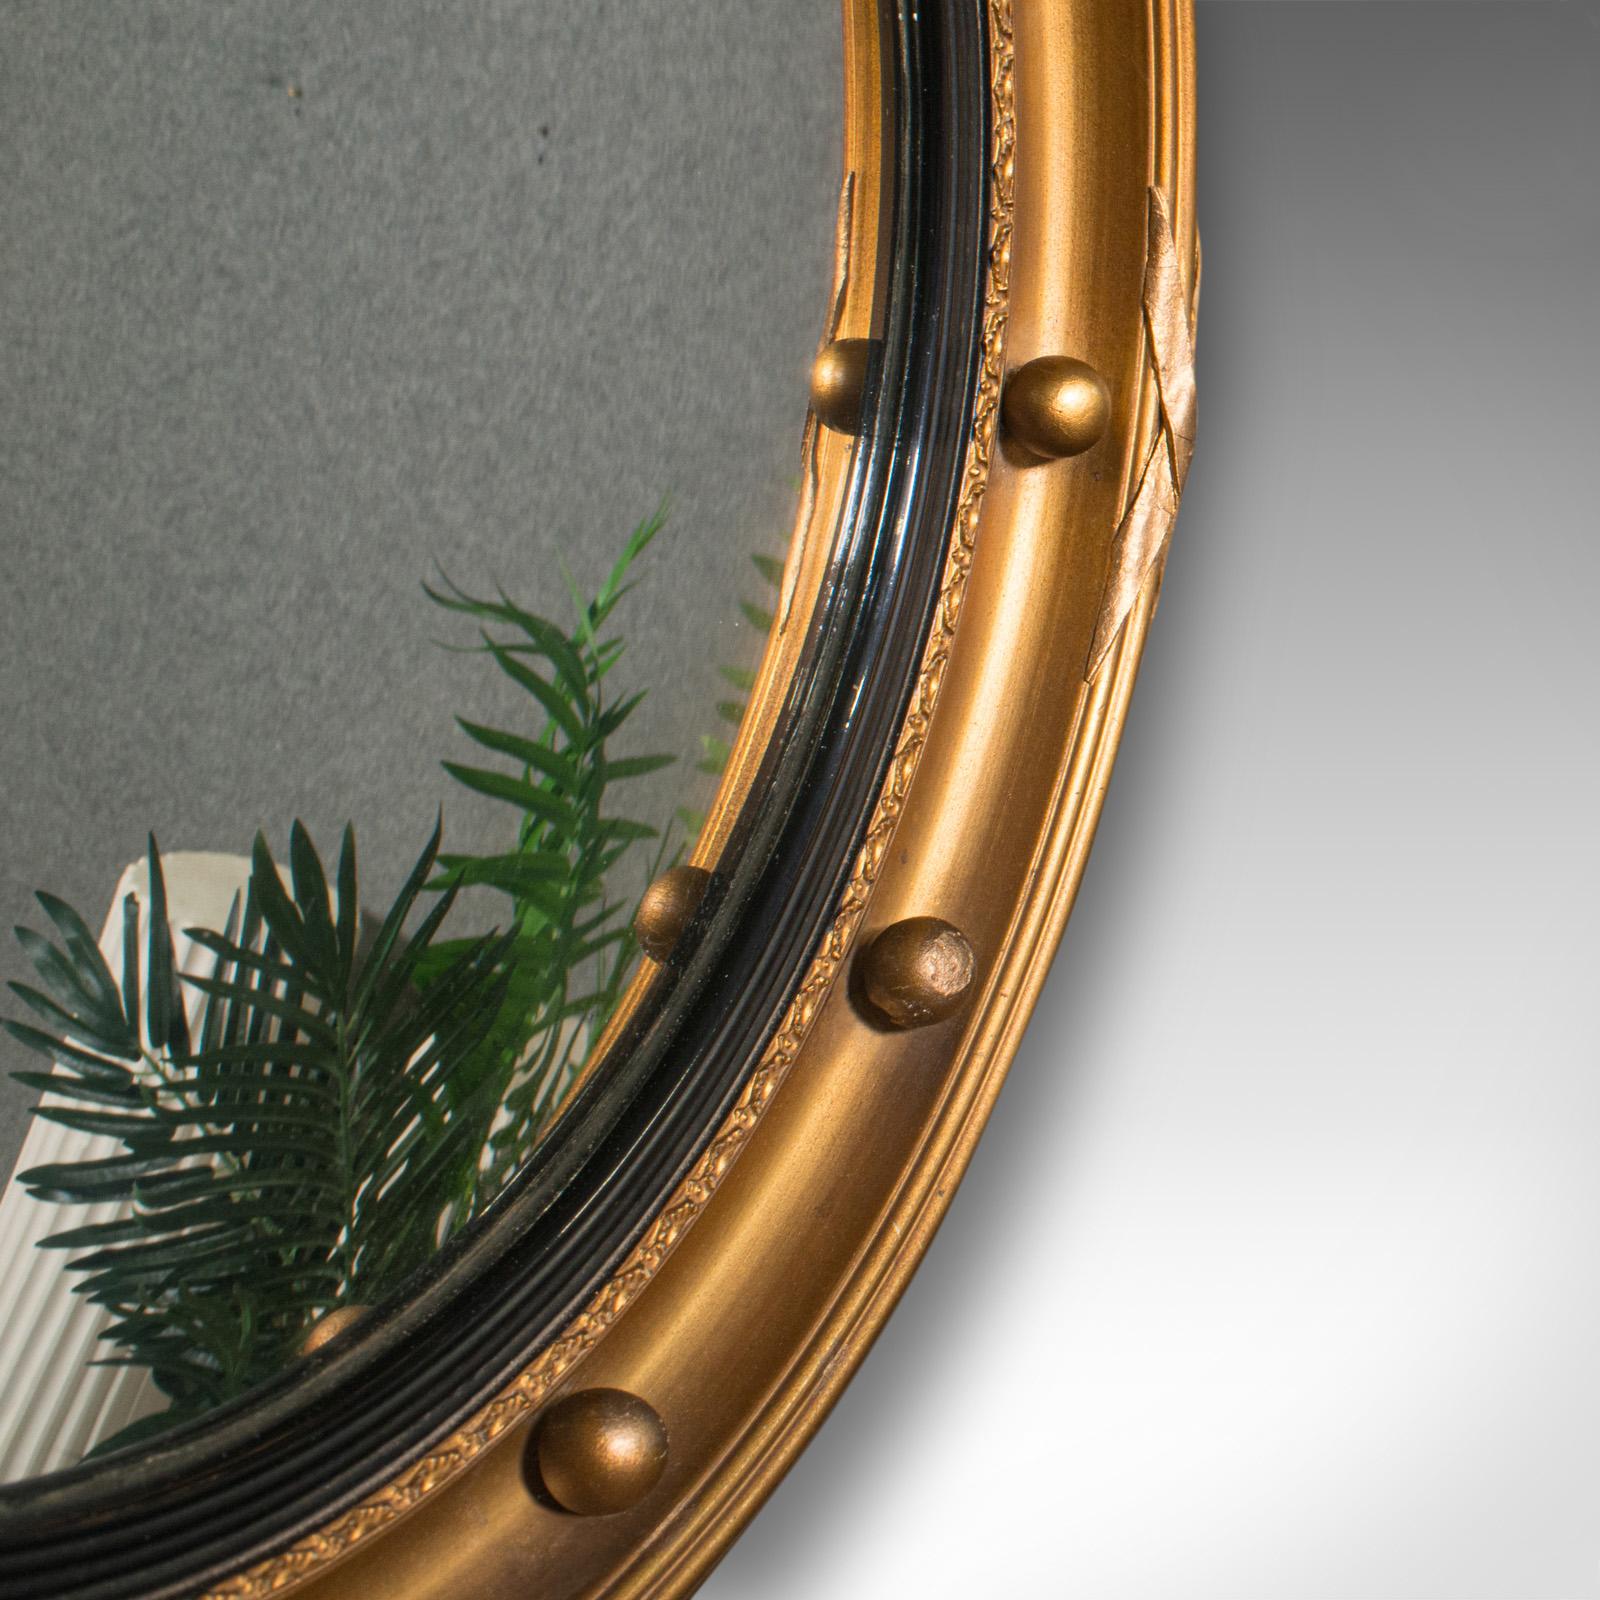 British Vintage Porthole Mirror, English, Decorative, Hall, Lounge, Regency Revival For Sale